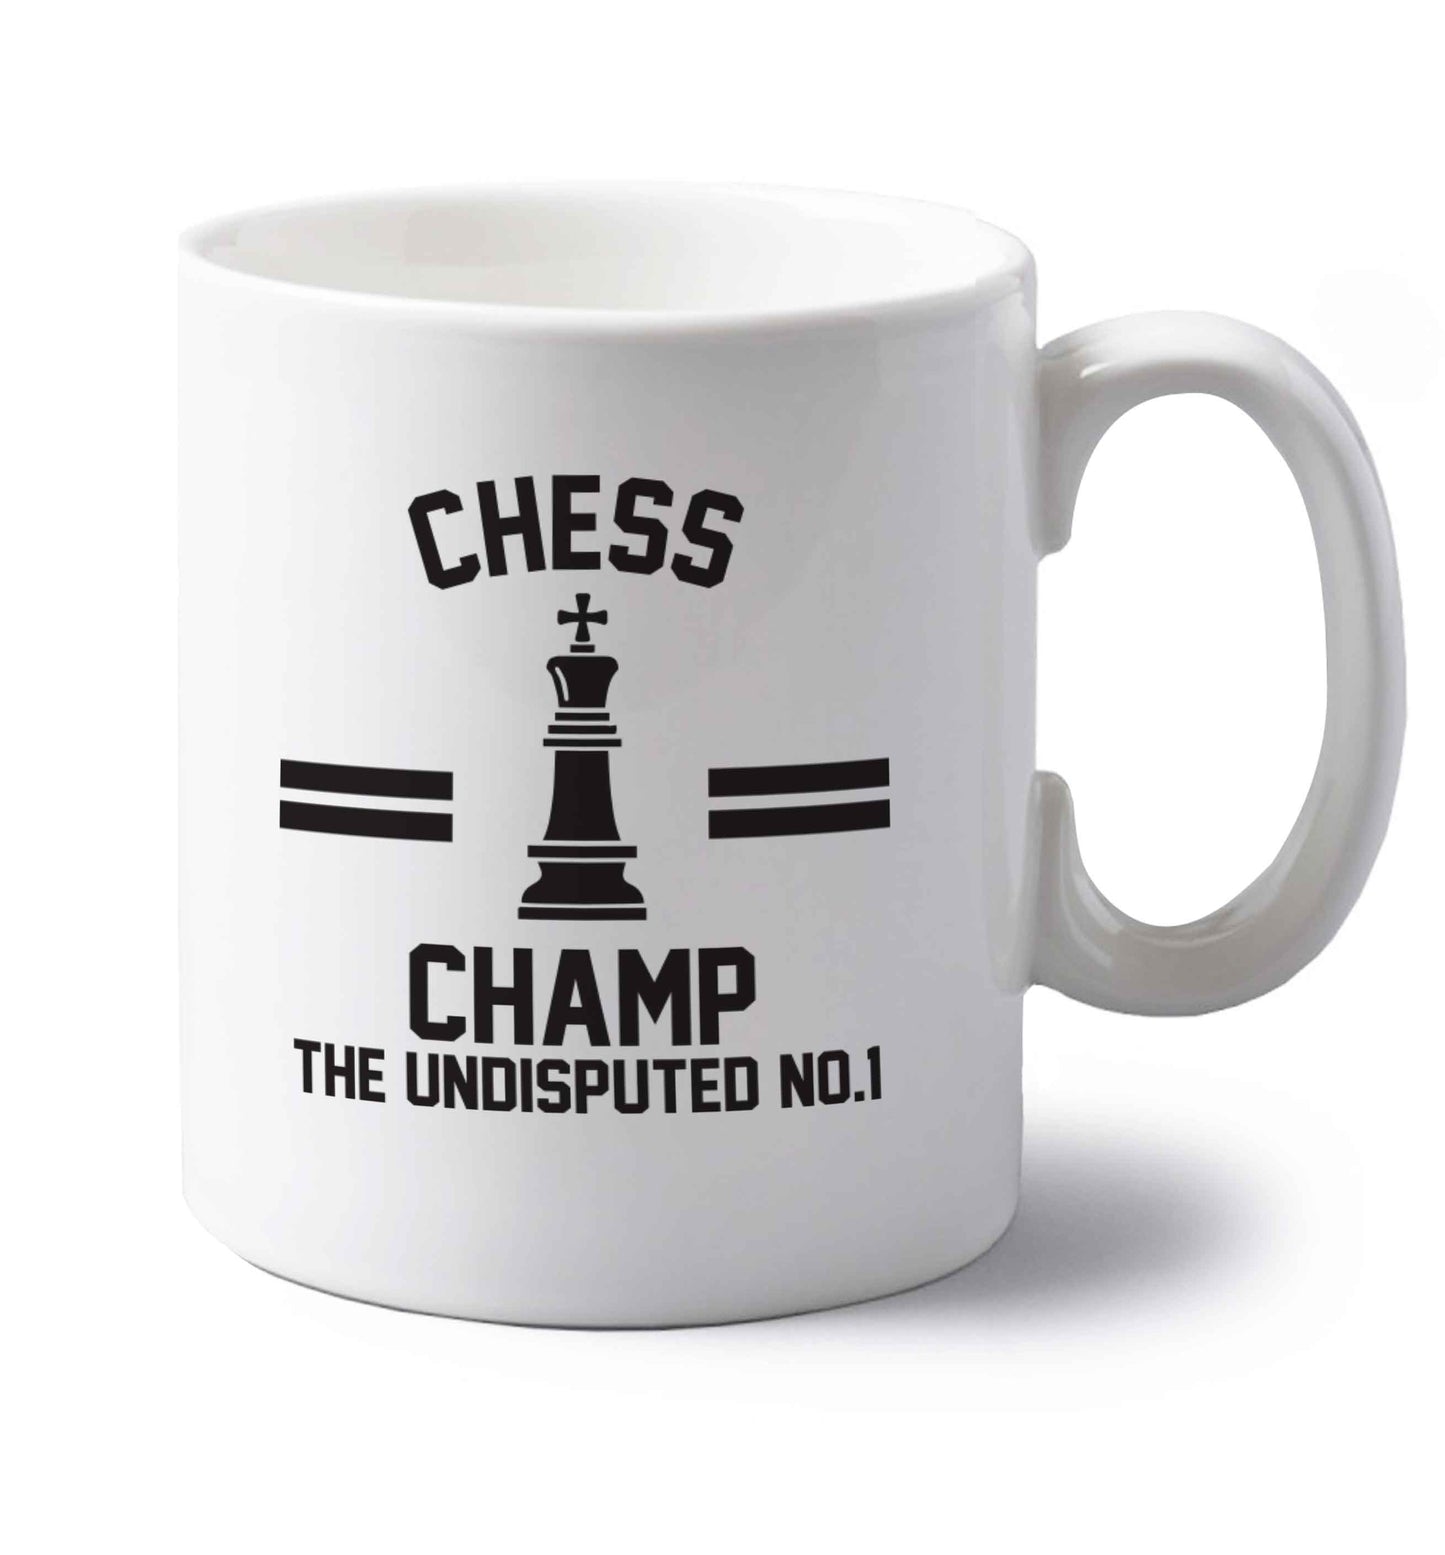 Undisputed chess championship no.1  left handed white ceramic mug 